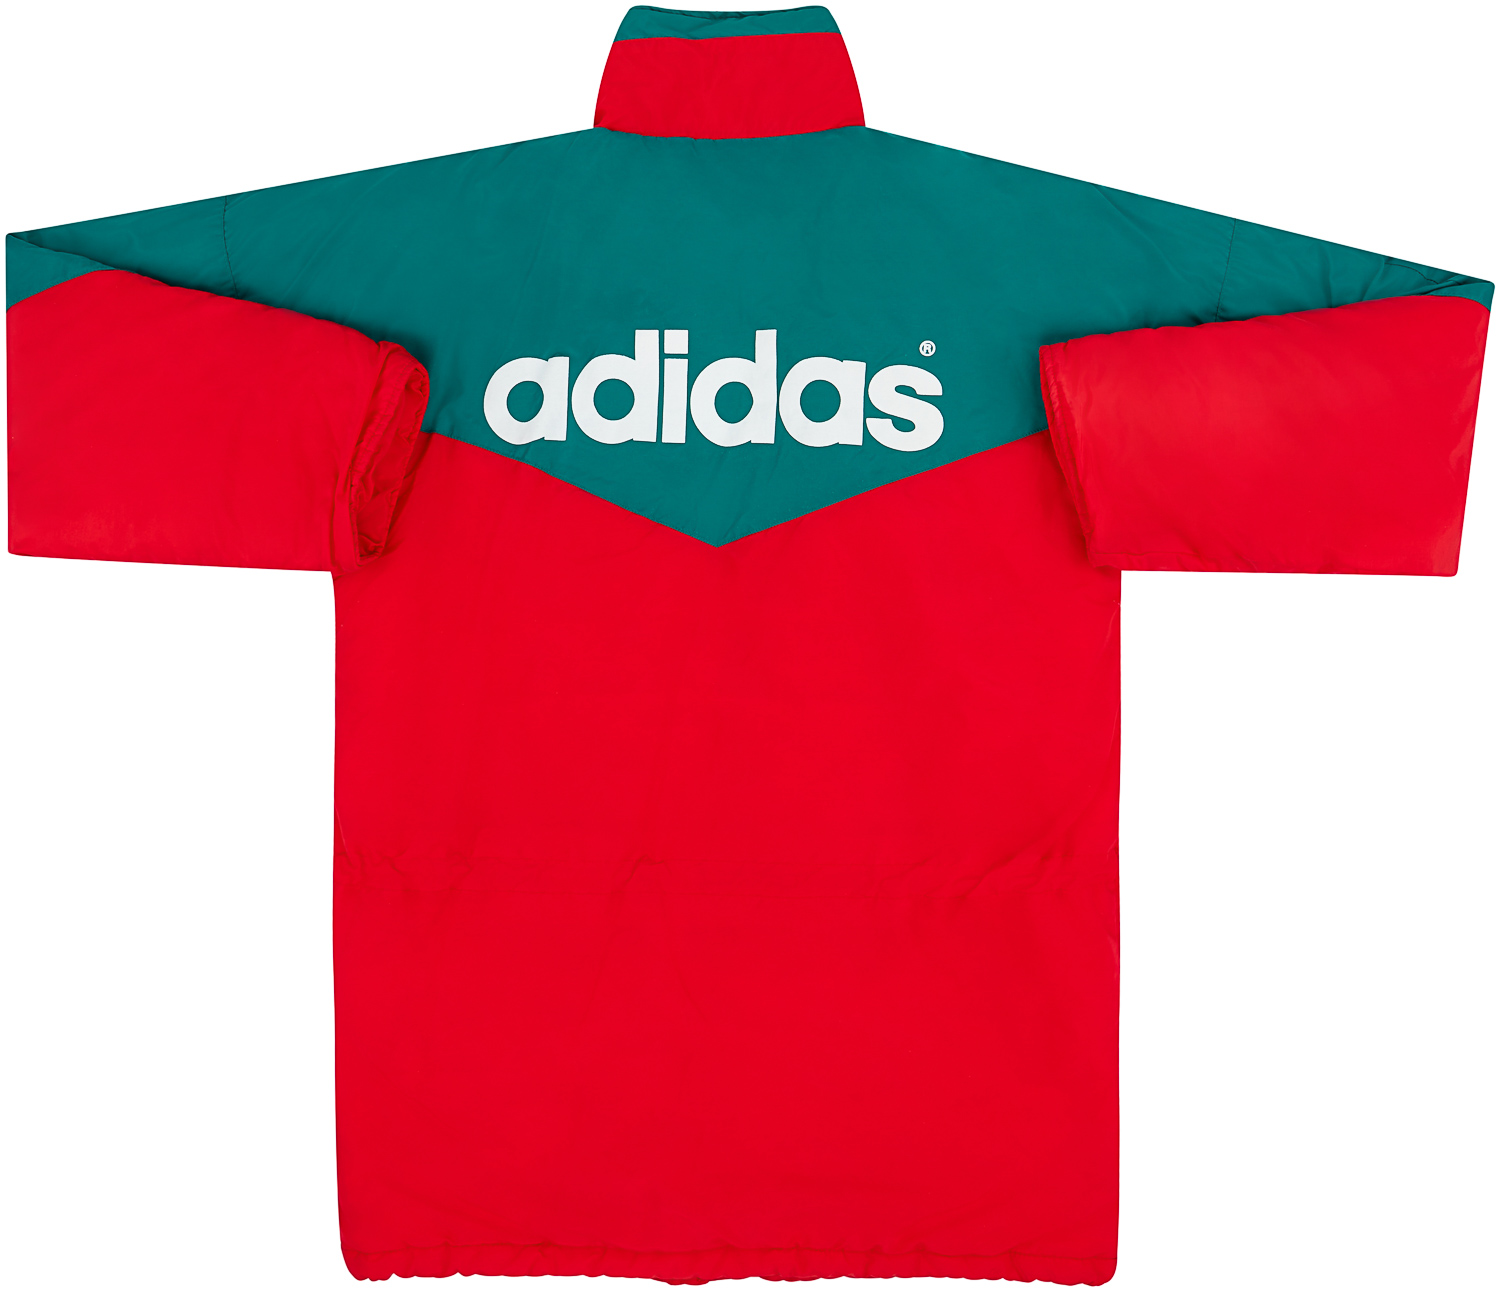 1992-93 Liverpool adidas Centenary Rain Jacket L/XL